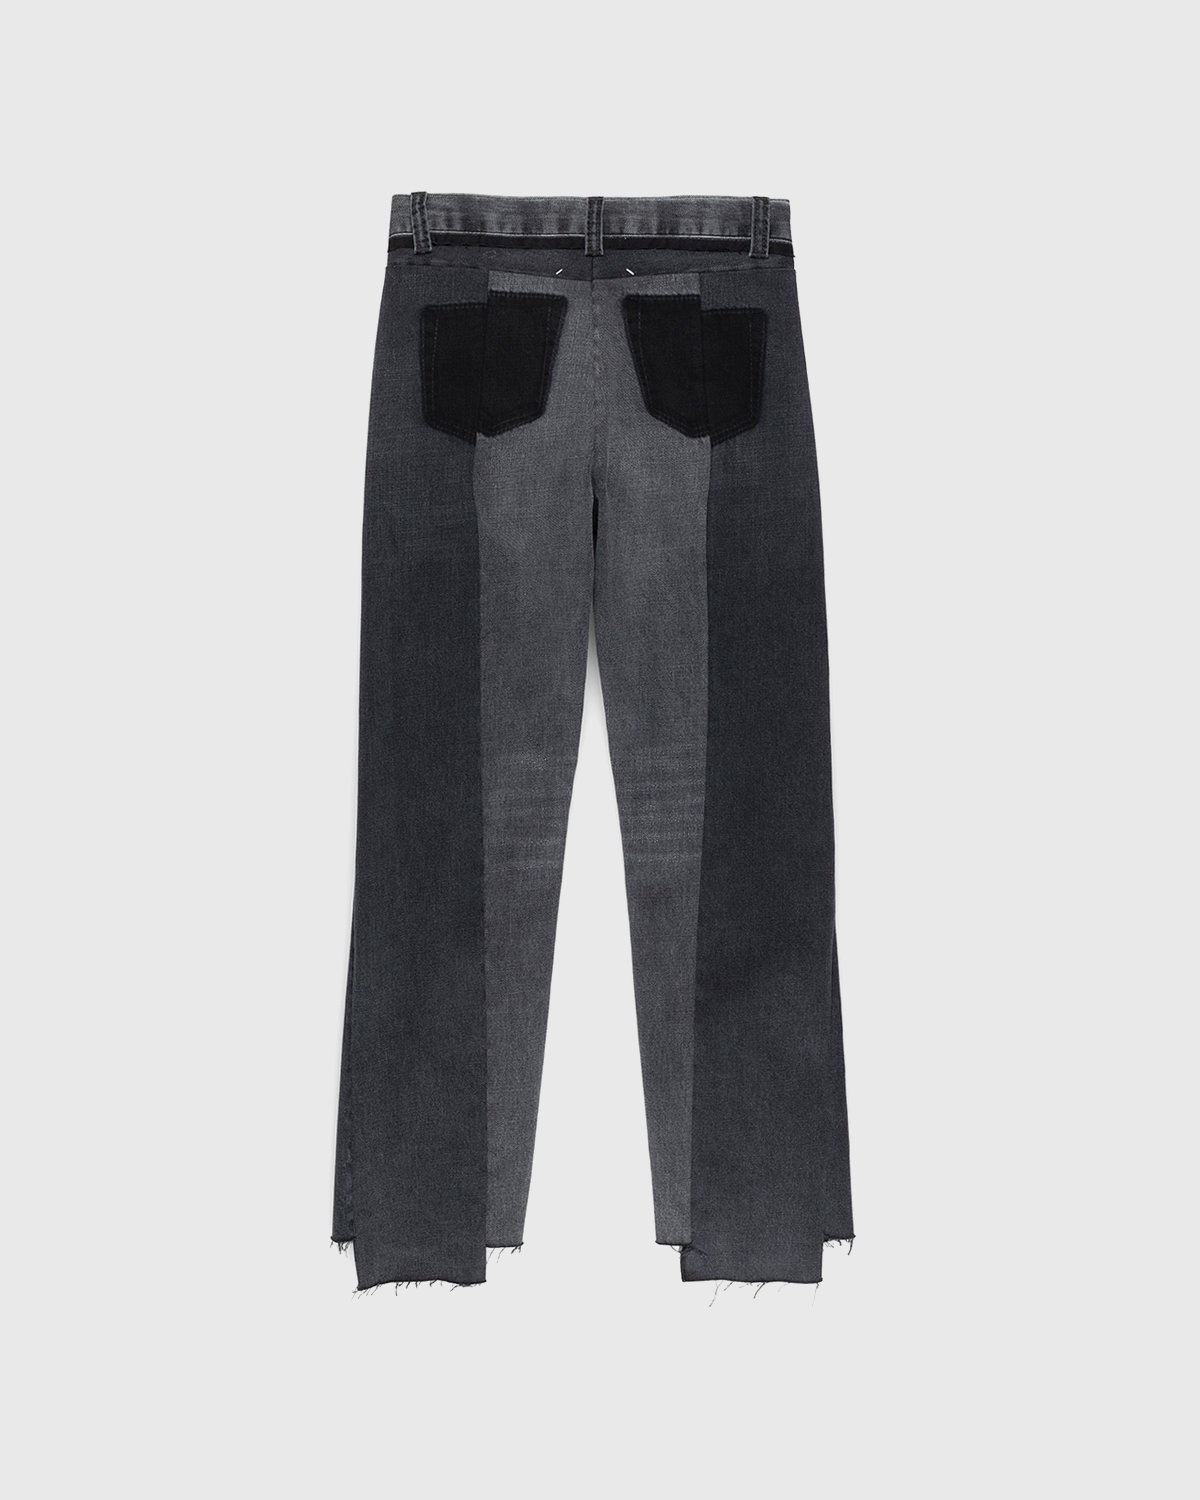 Maison Margiela – Spliced Jeans Black - Denim - Black - Image 2